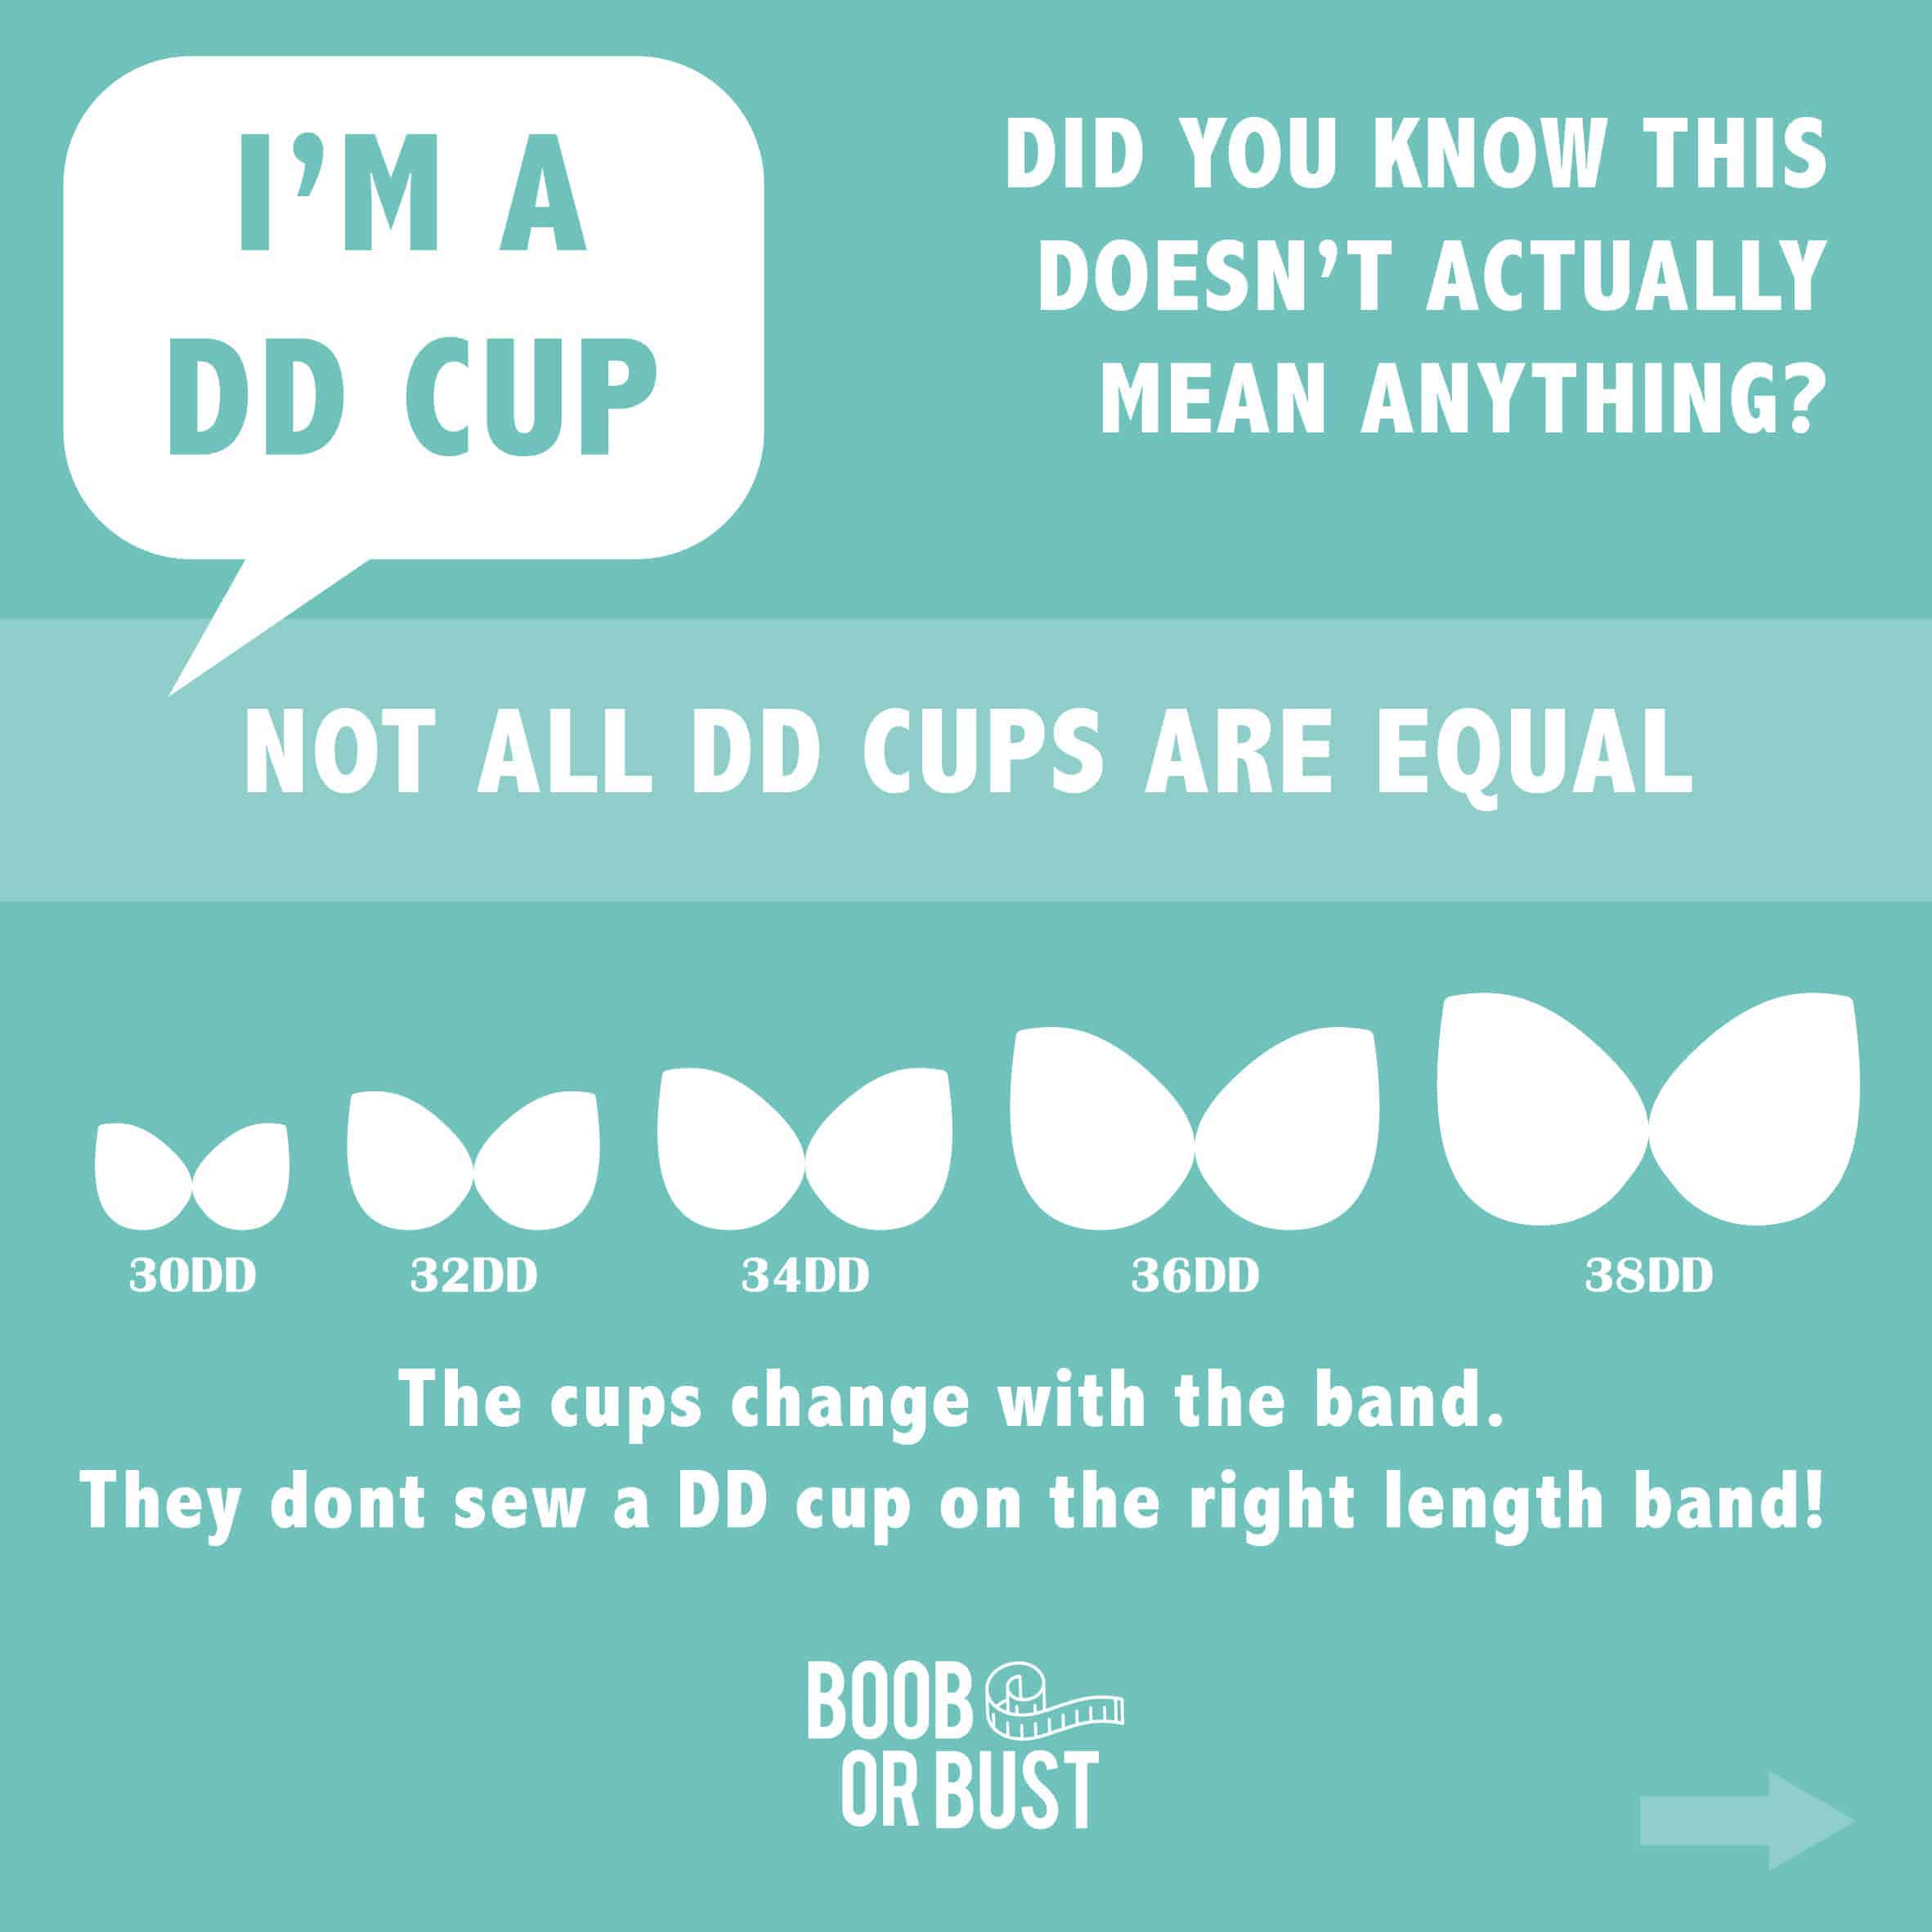 bra cup sizes